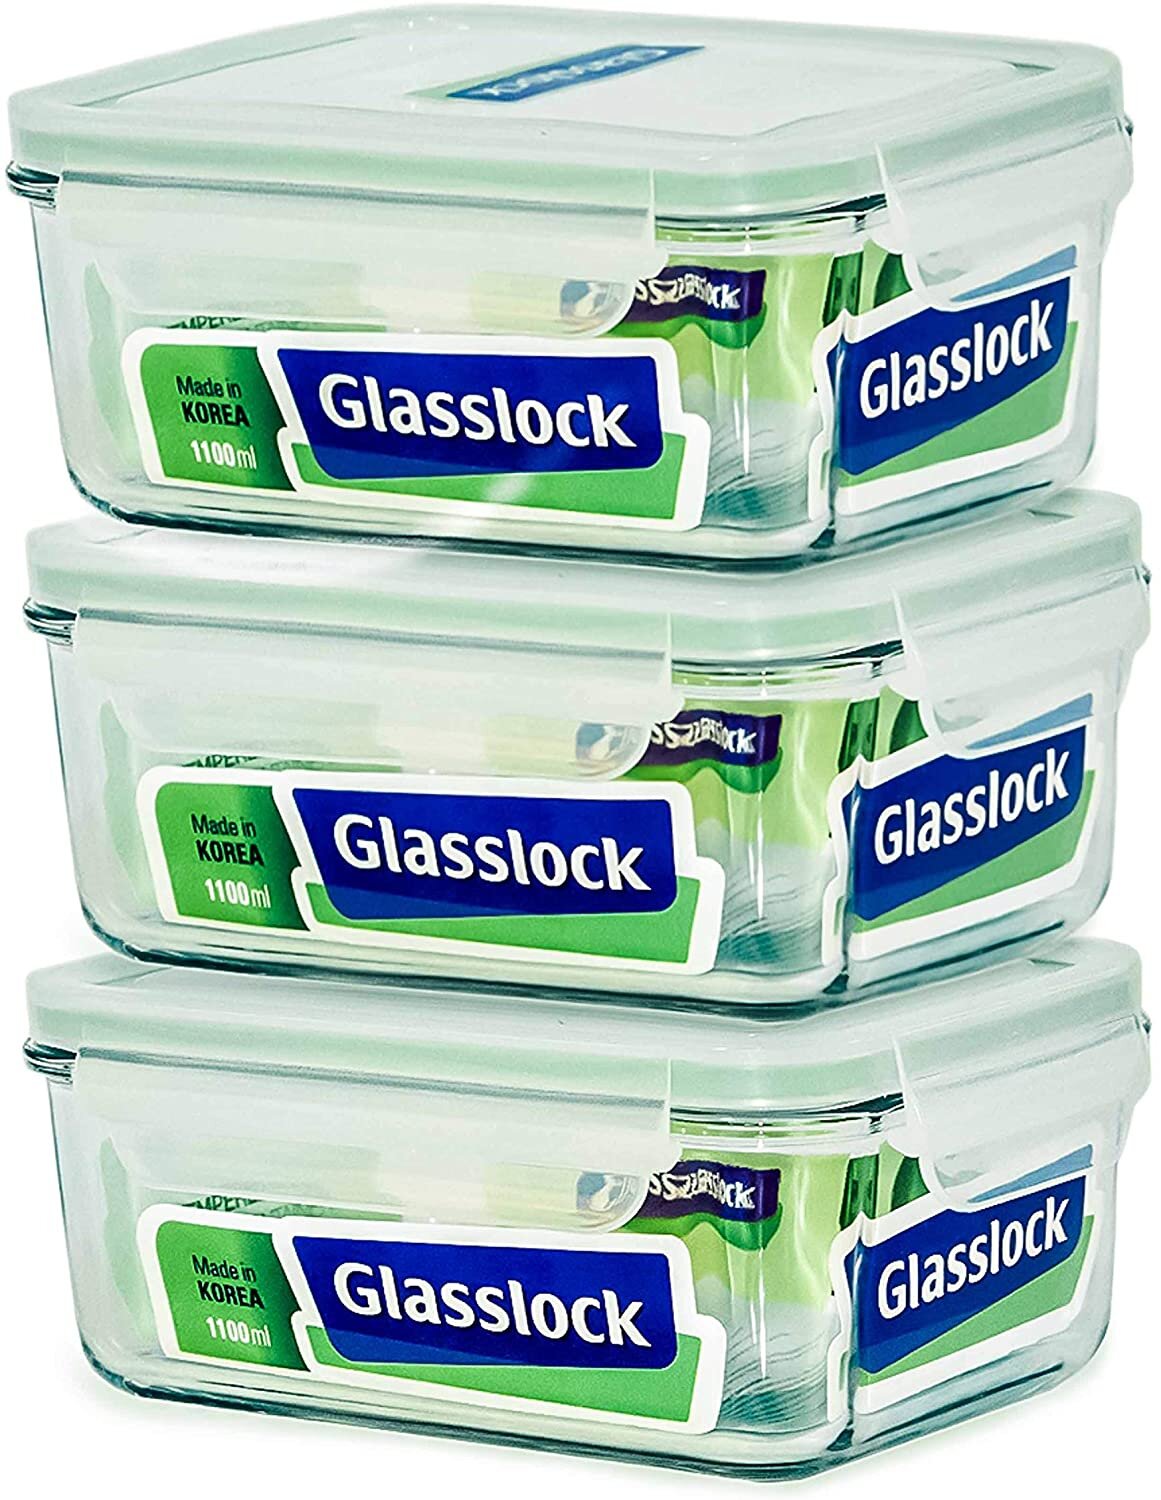 Glasslock Airtight Square Glass Storage Container (16 oz)